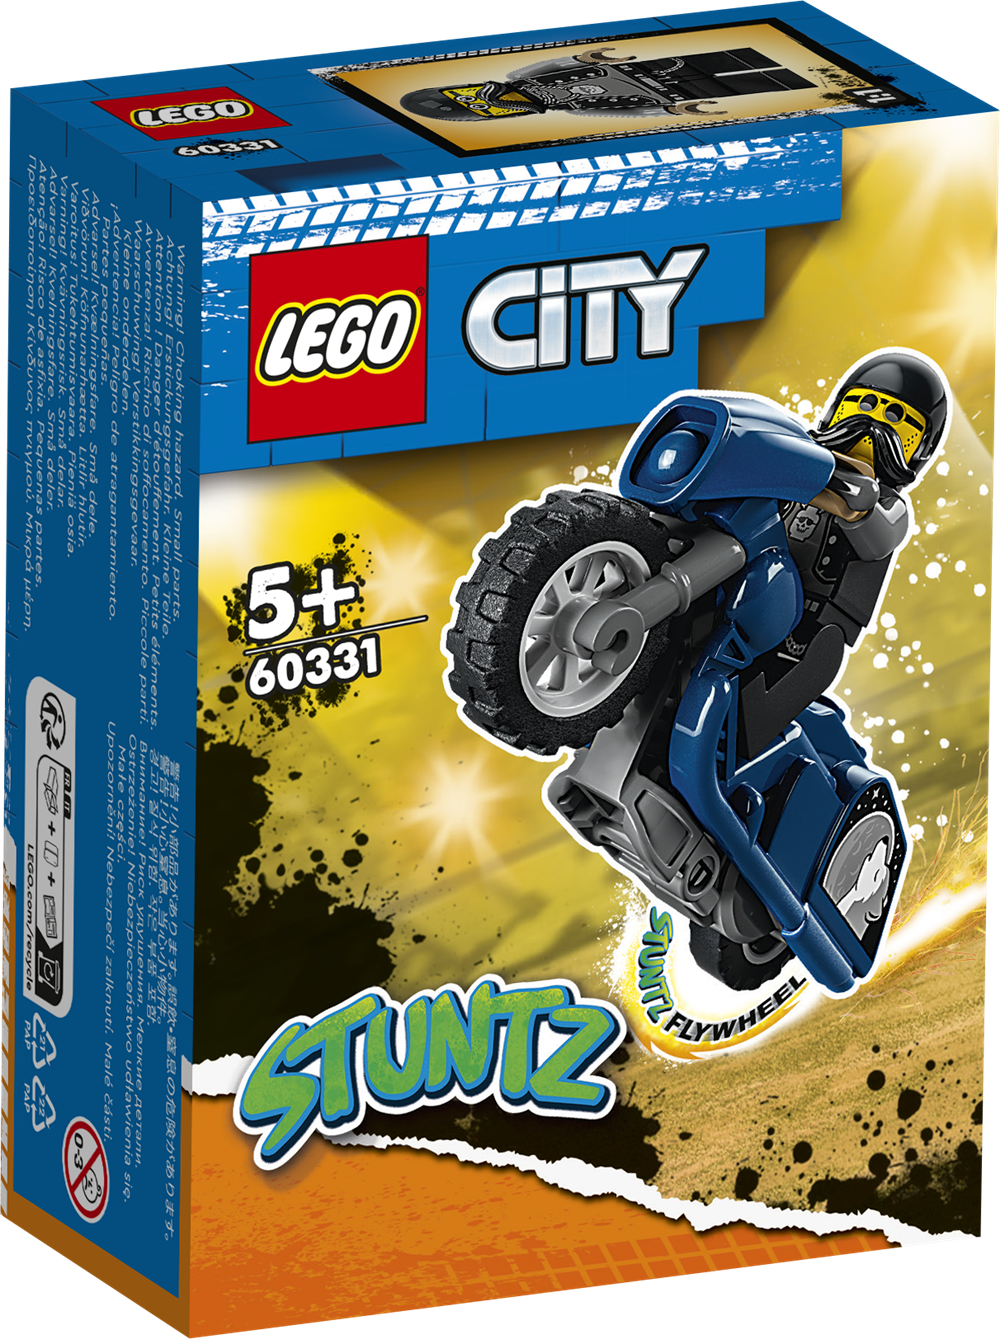 LEGO City 60331 Touring-stuntmotorcykel